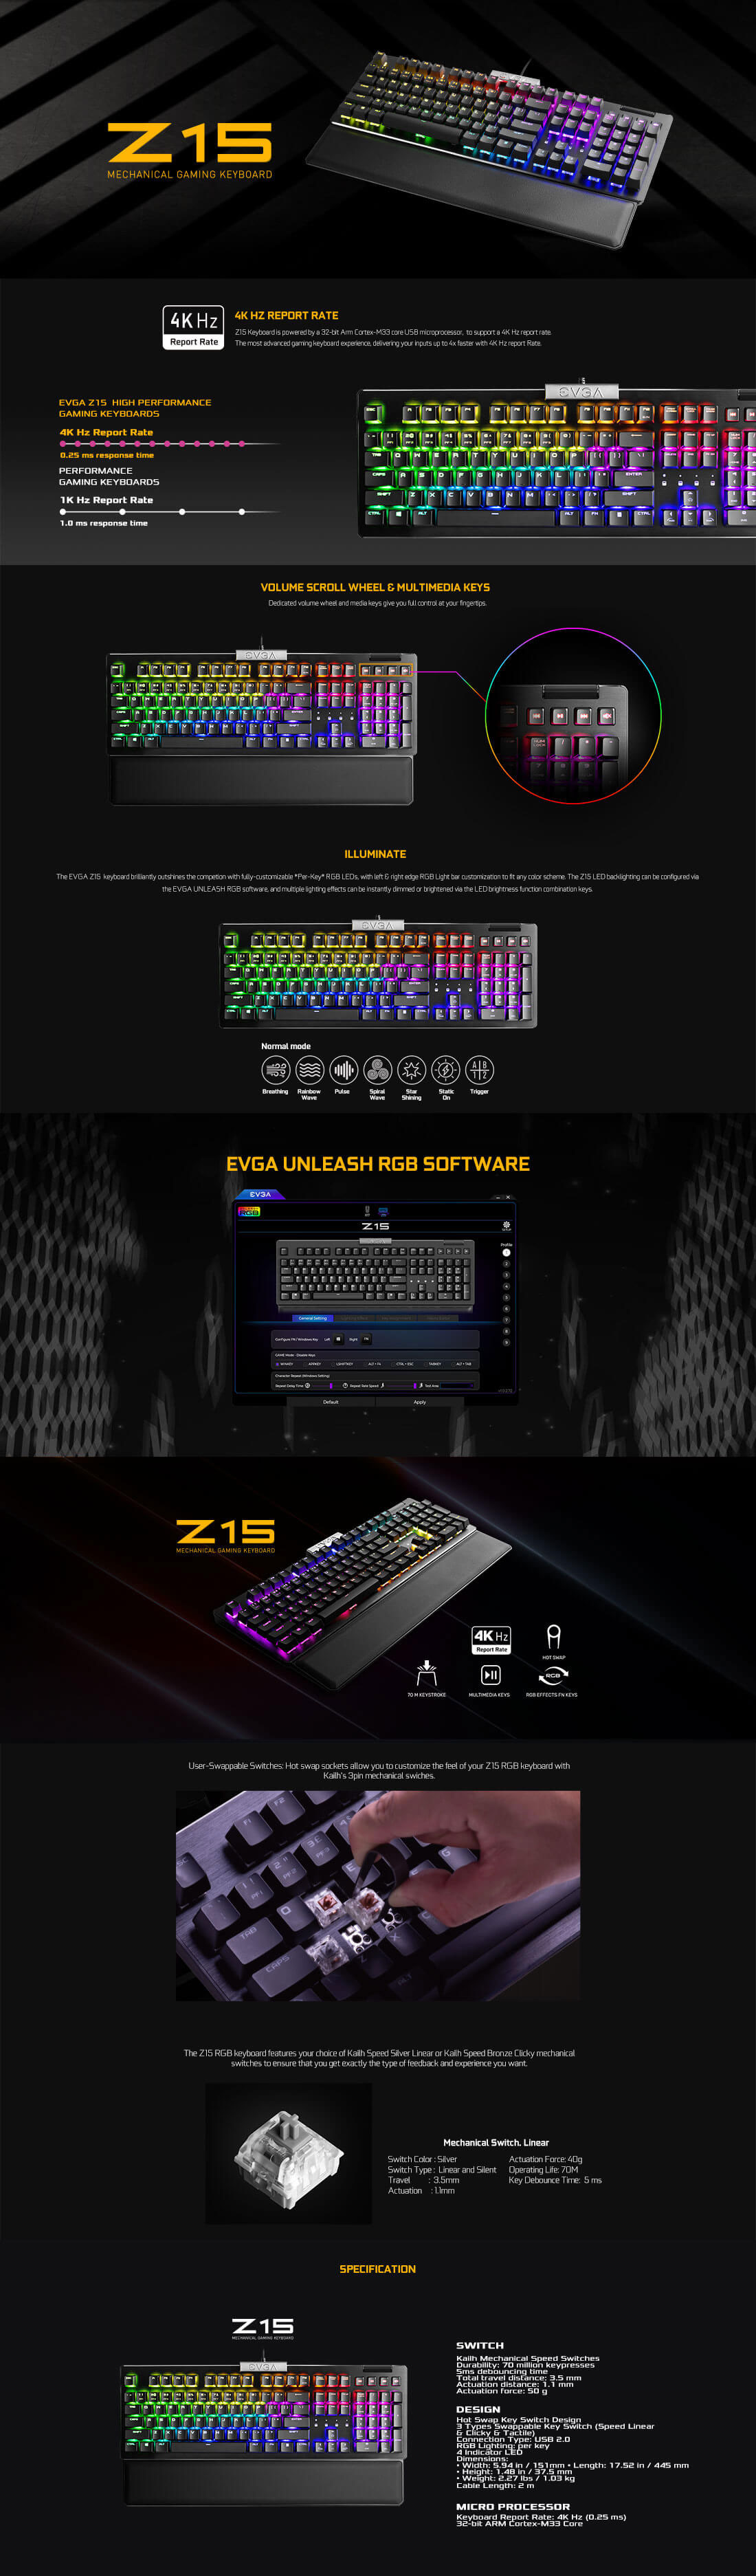 EVGA - Products - EVGA Z15 RGB Mechanical Gaming Keyboard (Linear 